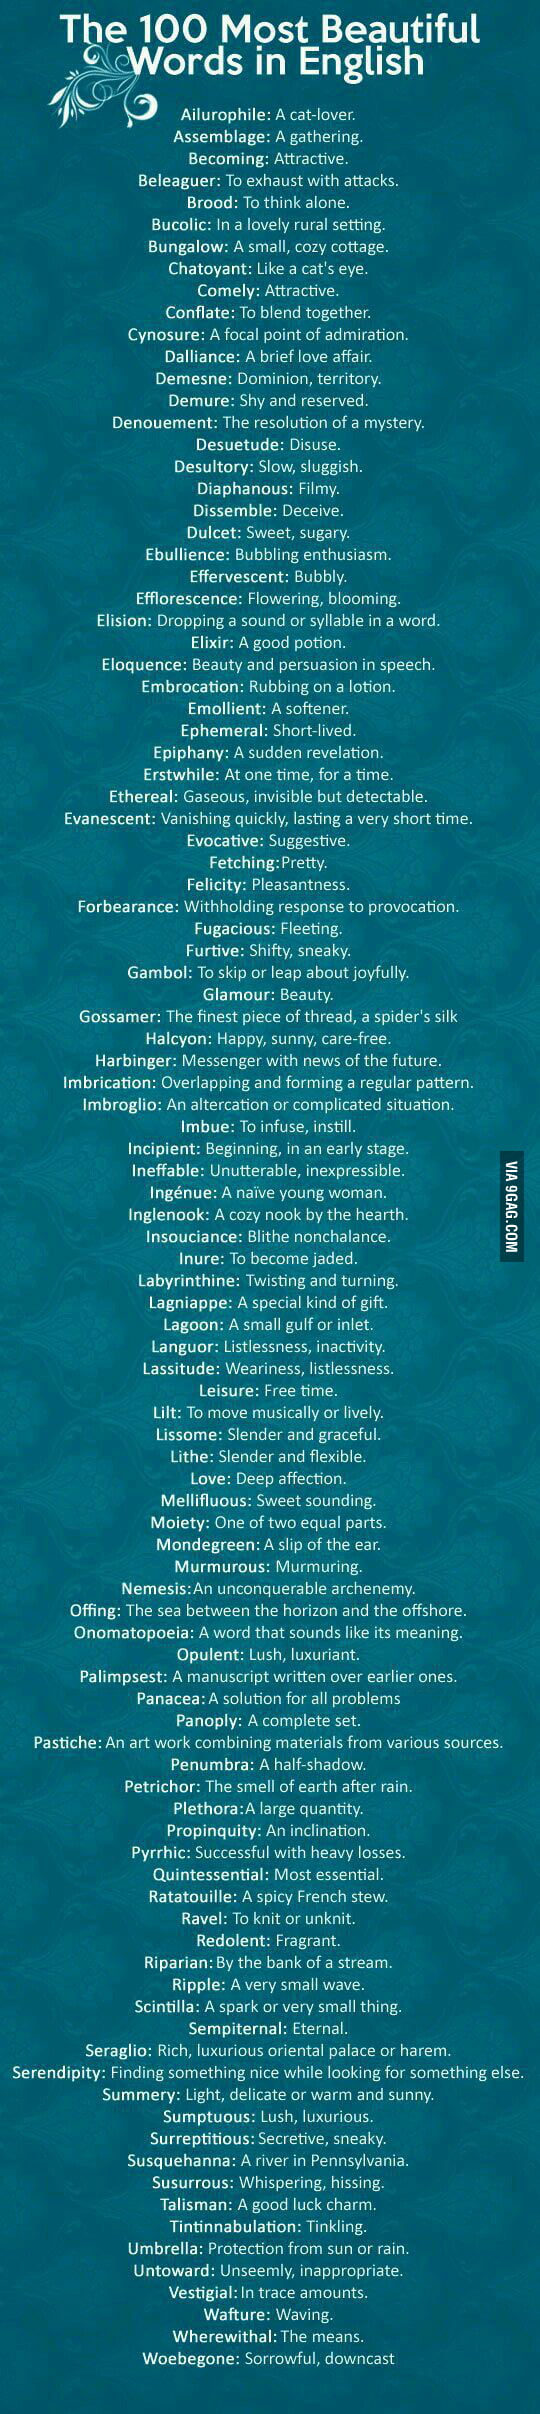 English beautiful Words